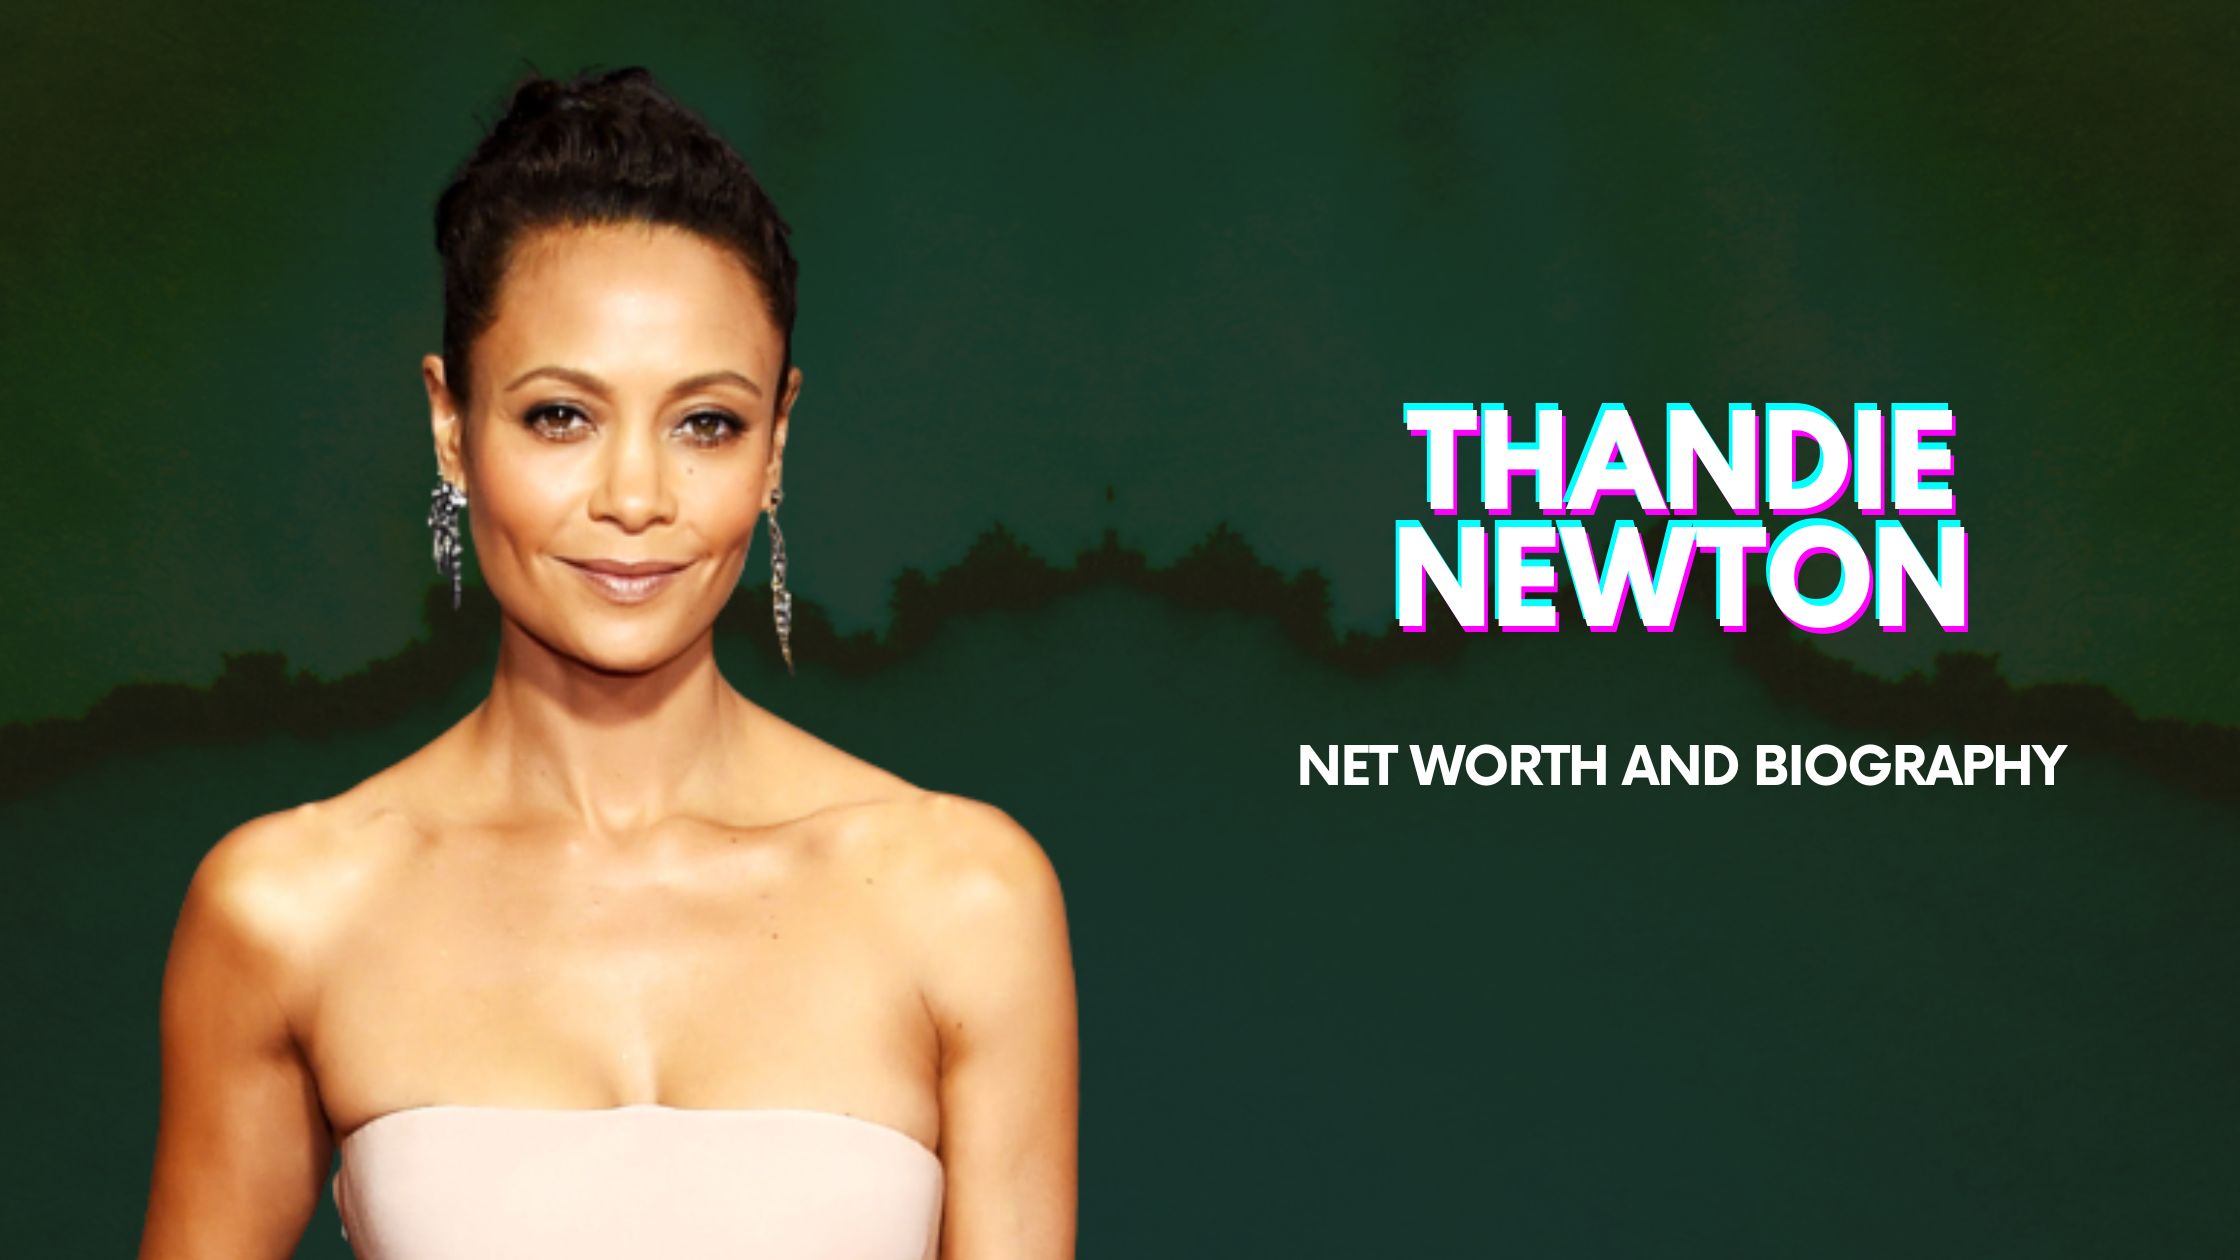 Thandie Newton Net Worth And Biography